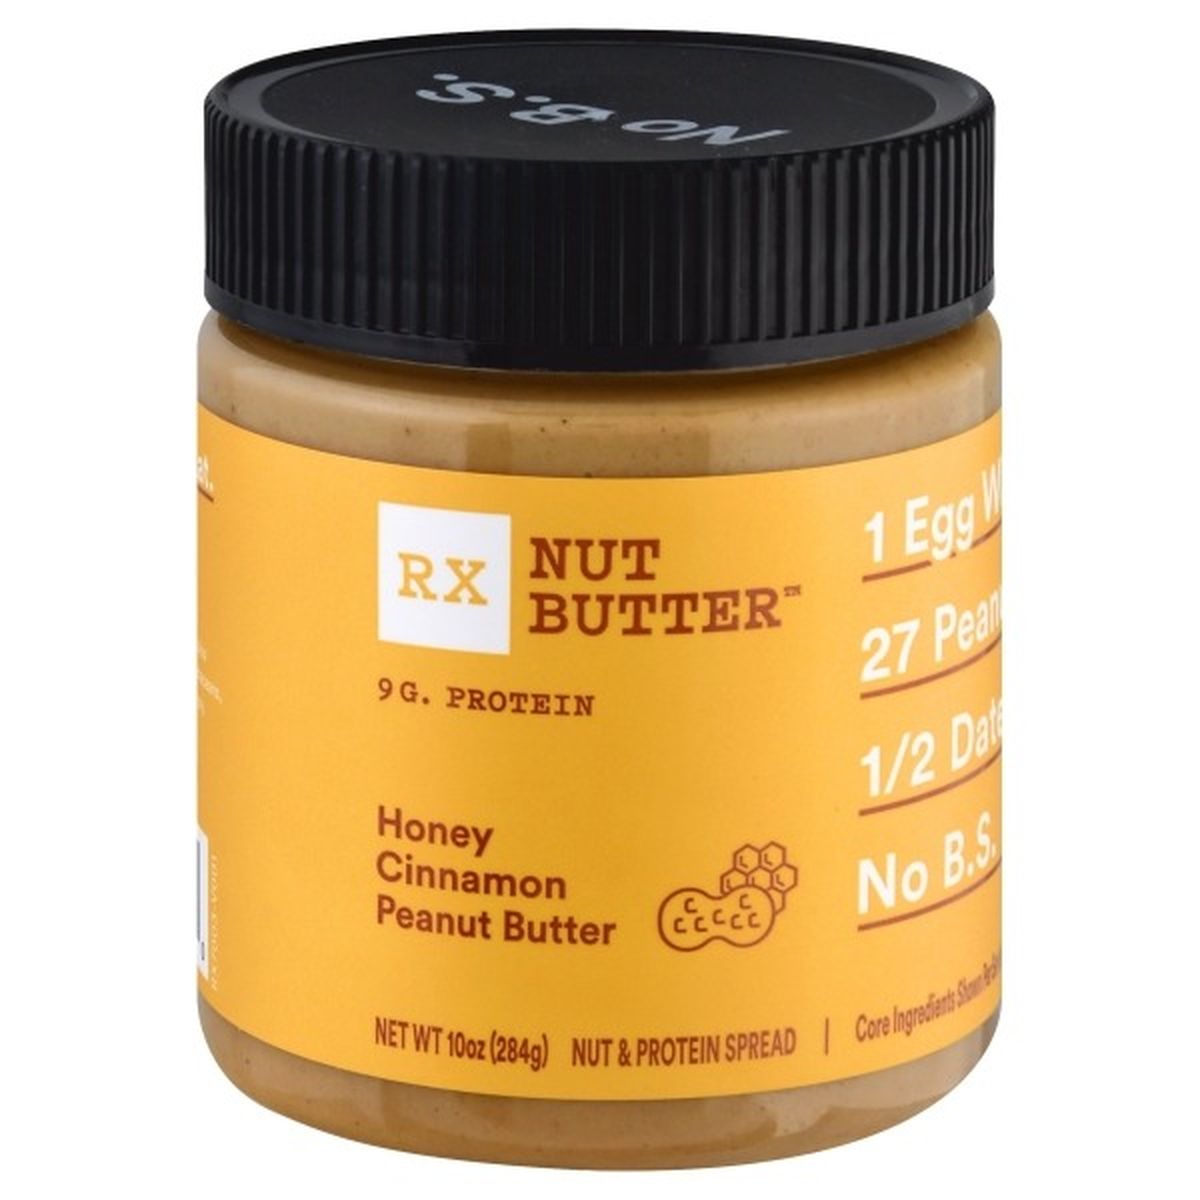 Calories in RXBAR RX Nut Butter Nut Butter Nut & Protein Spread, Honey Cinnamon Peanut Butter